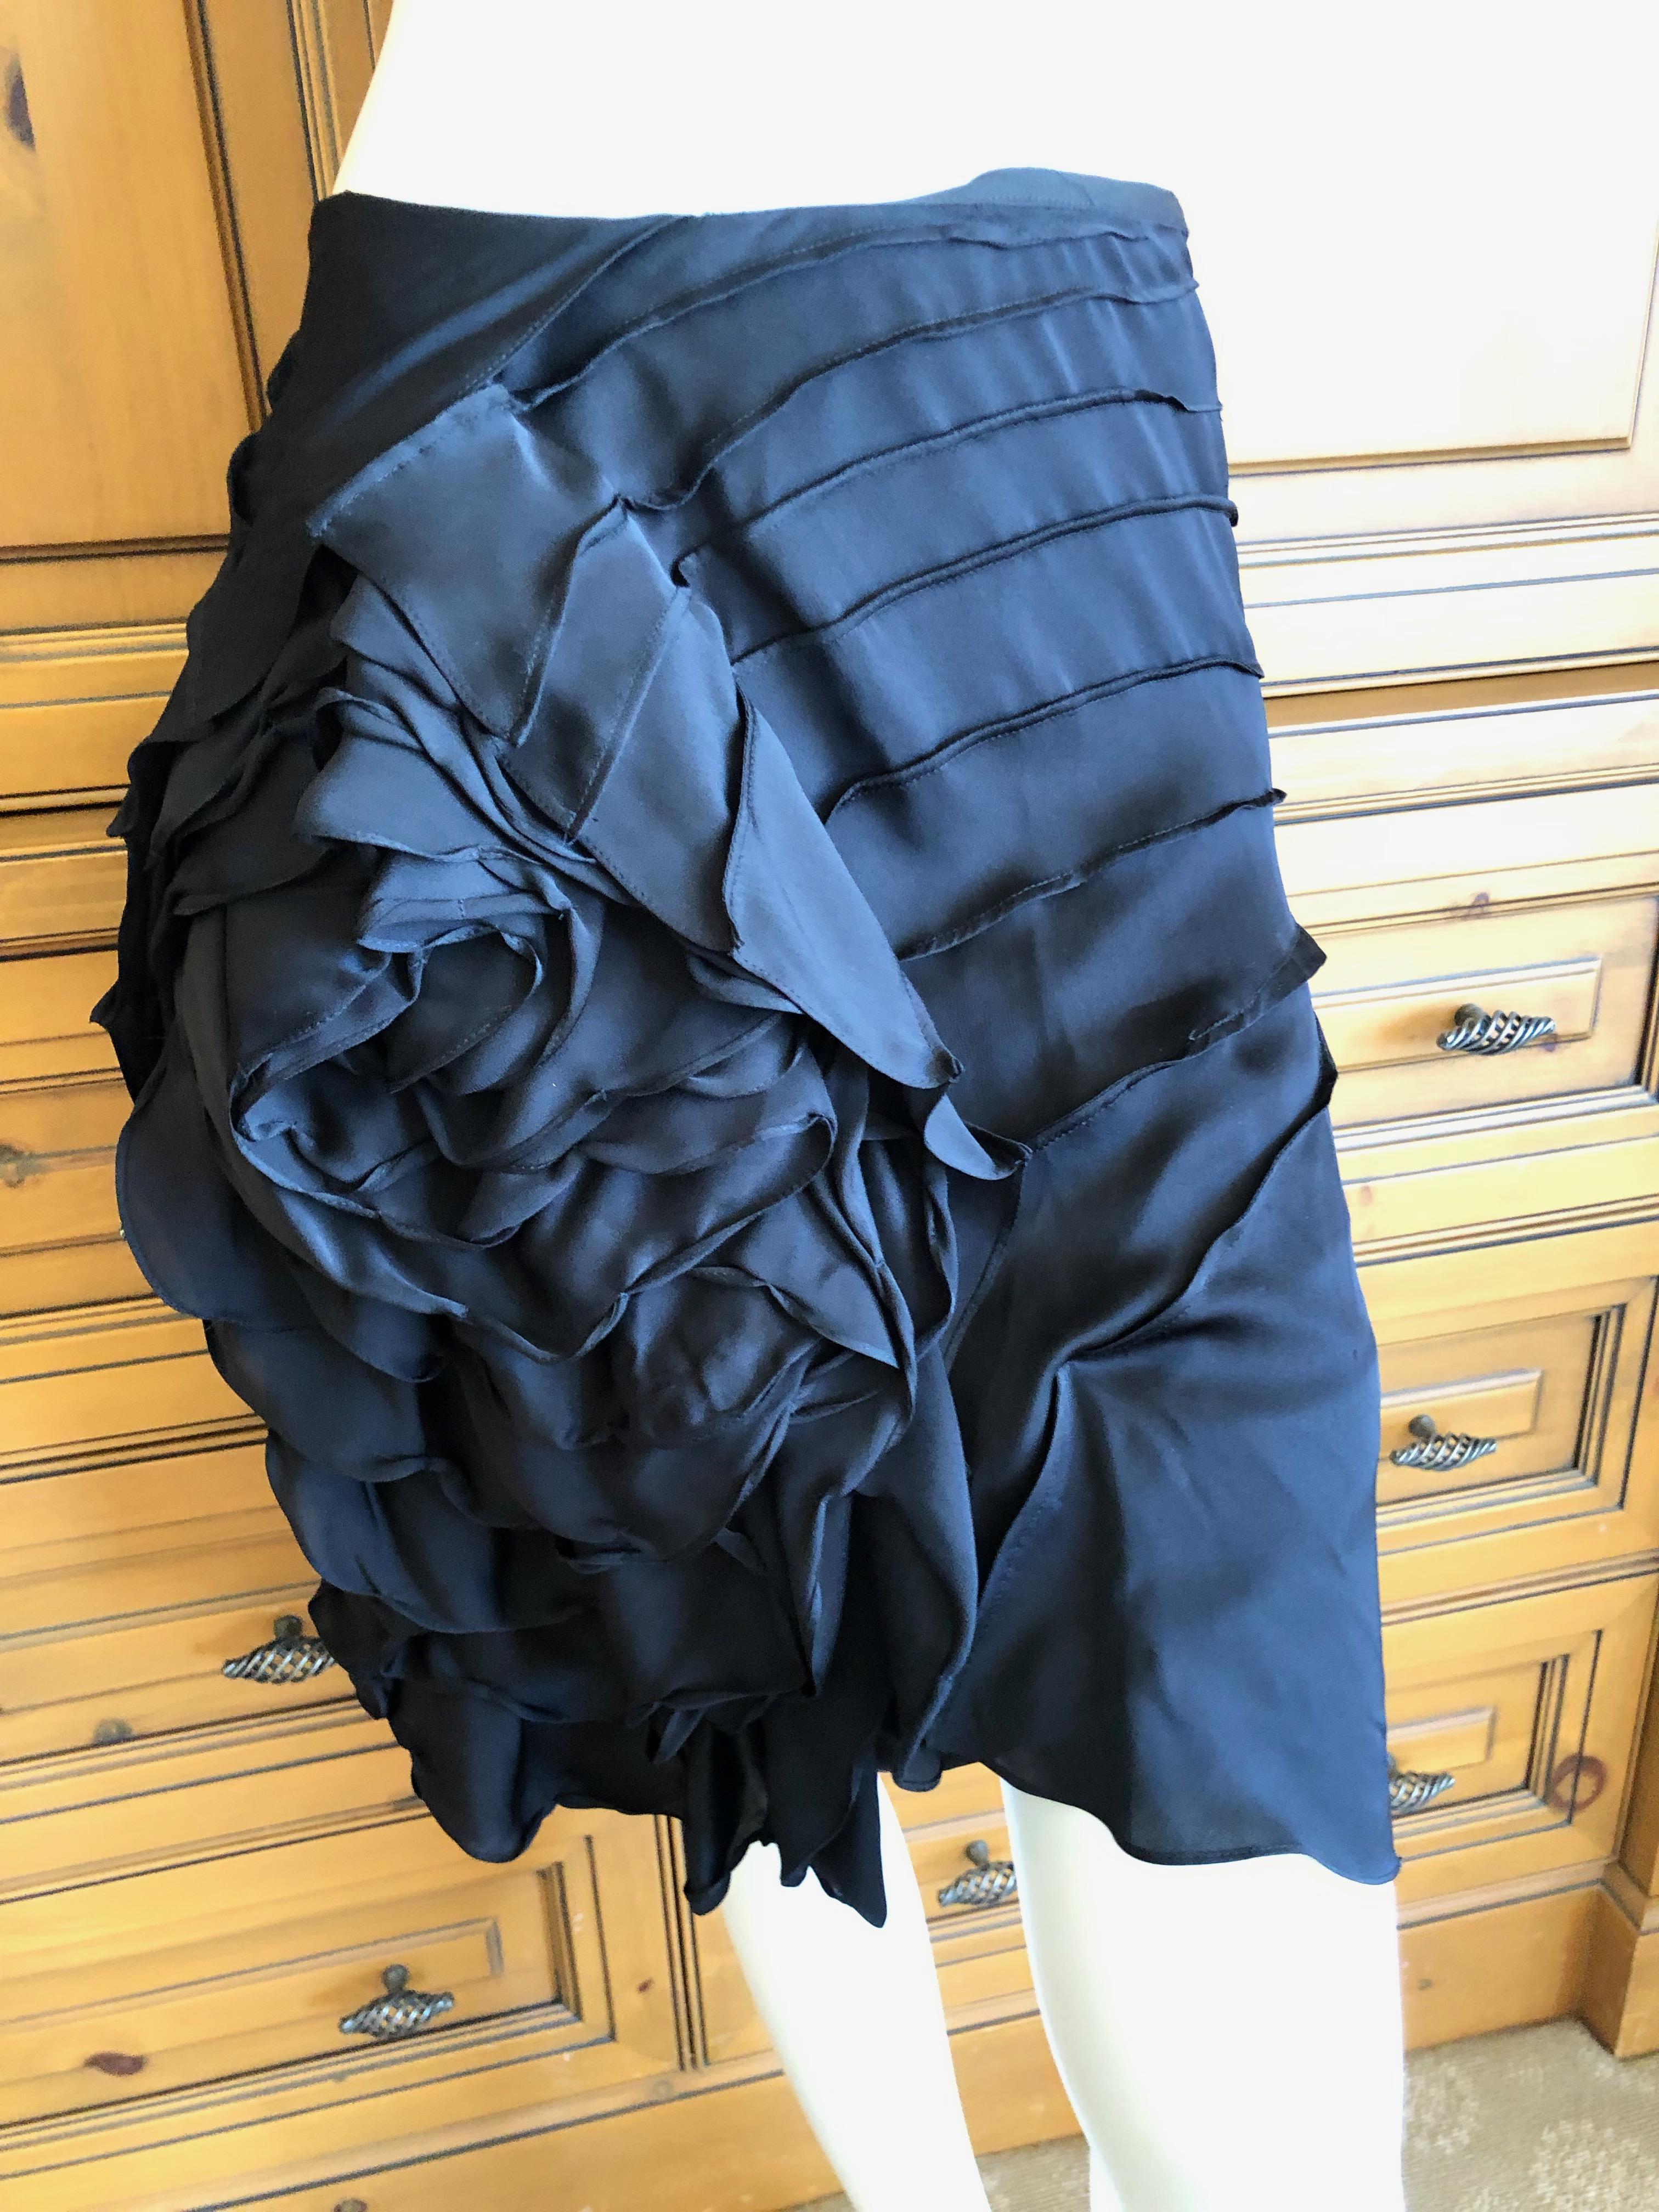 Yves Saint Laurent by Tom Ford Black 3D Rose Blossom Skirt 
Size Medium, size tag removed
Waist: 28